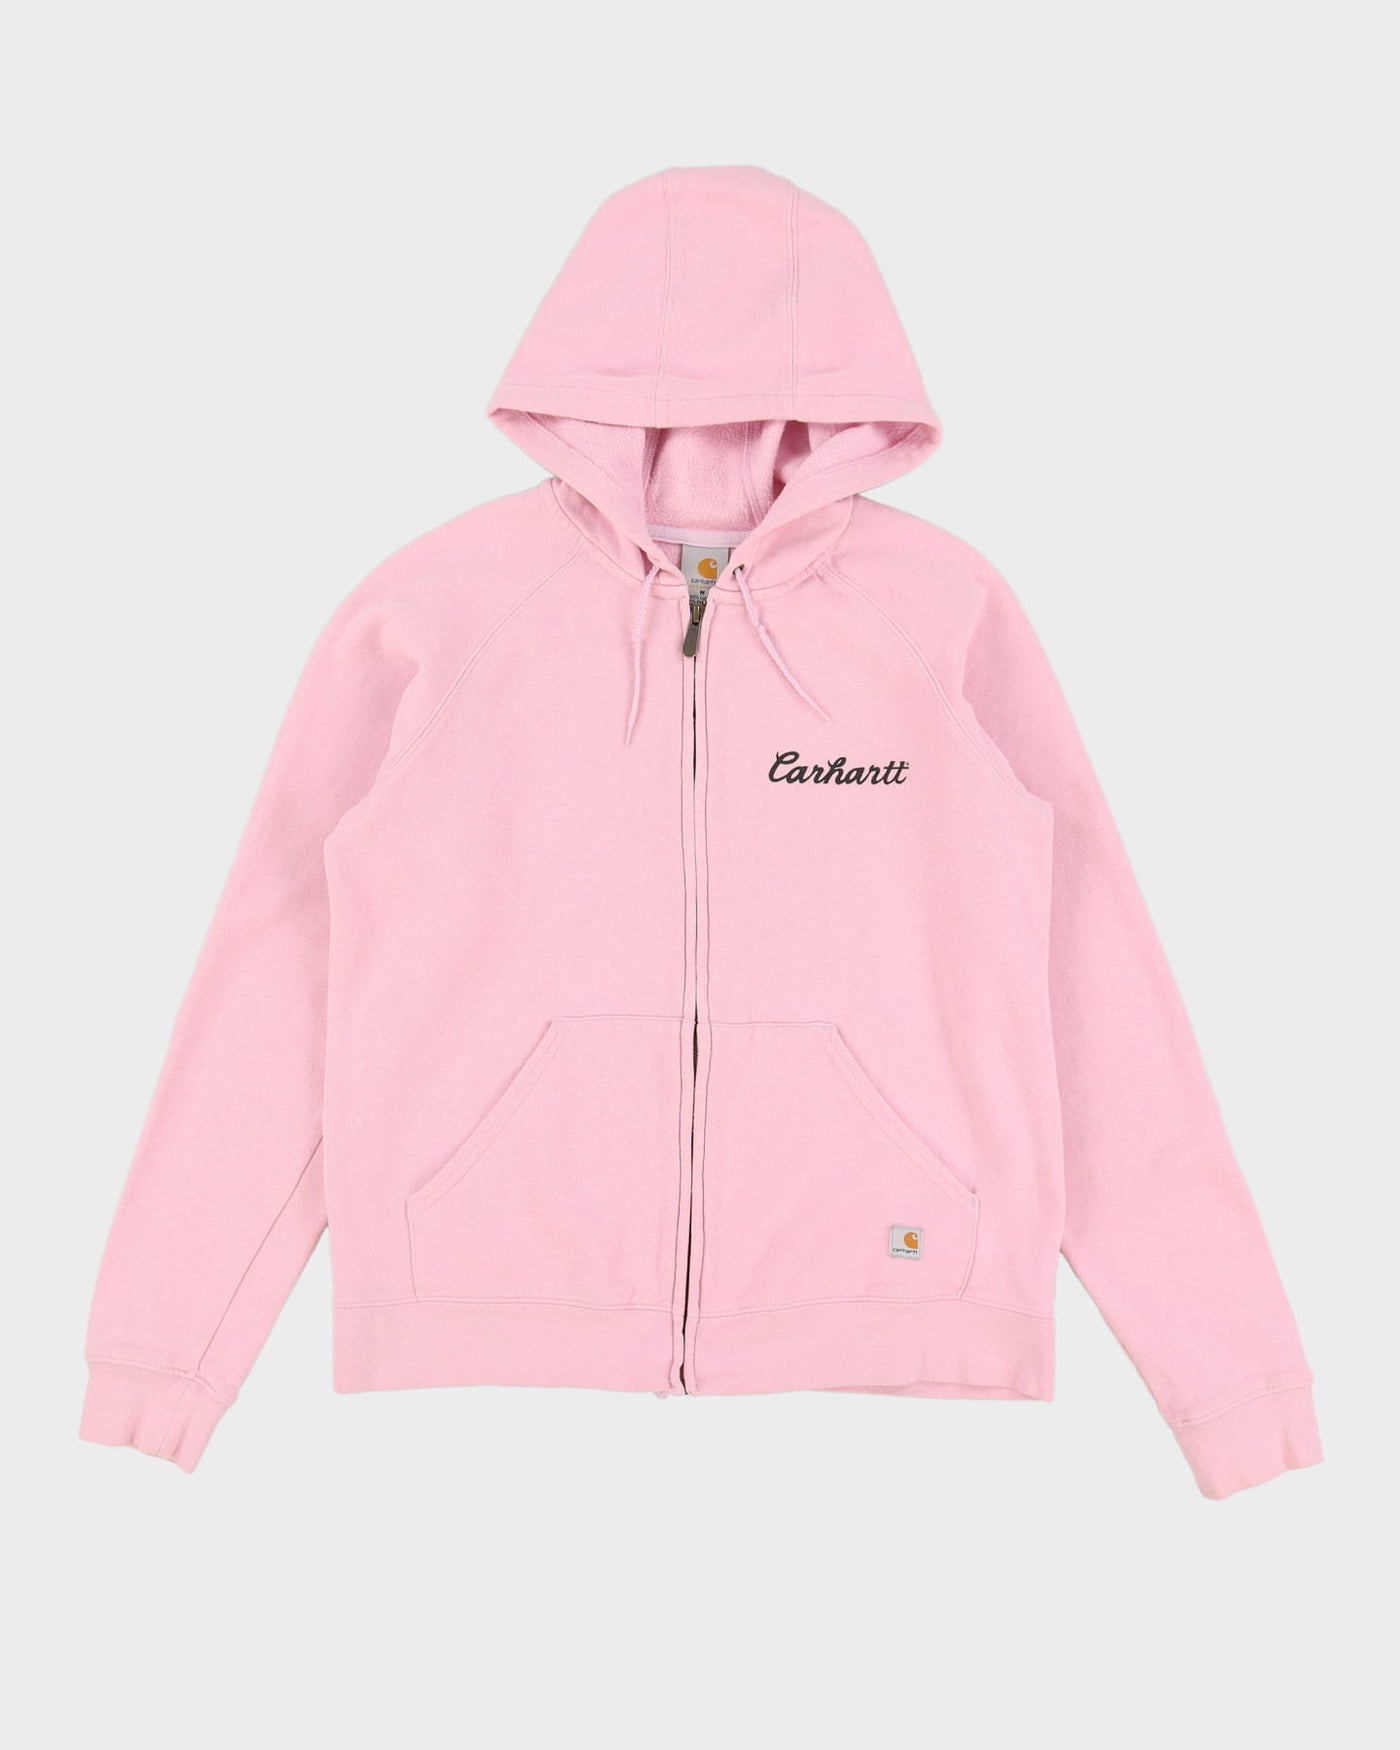 Carhartt Pink Full-Zip Oversized Hoodie - M